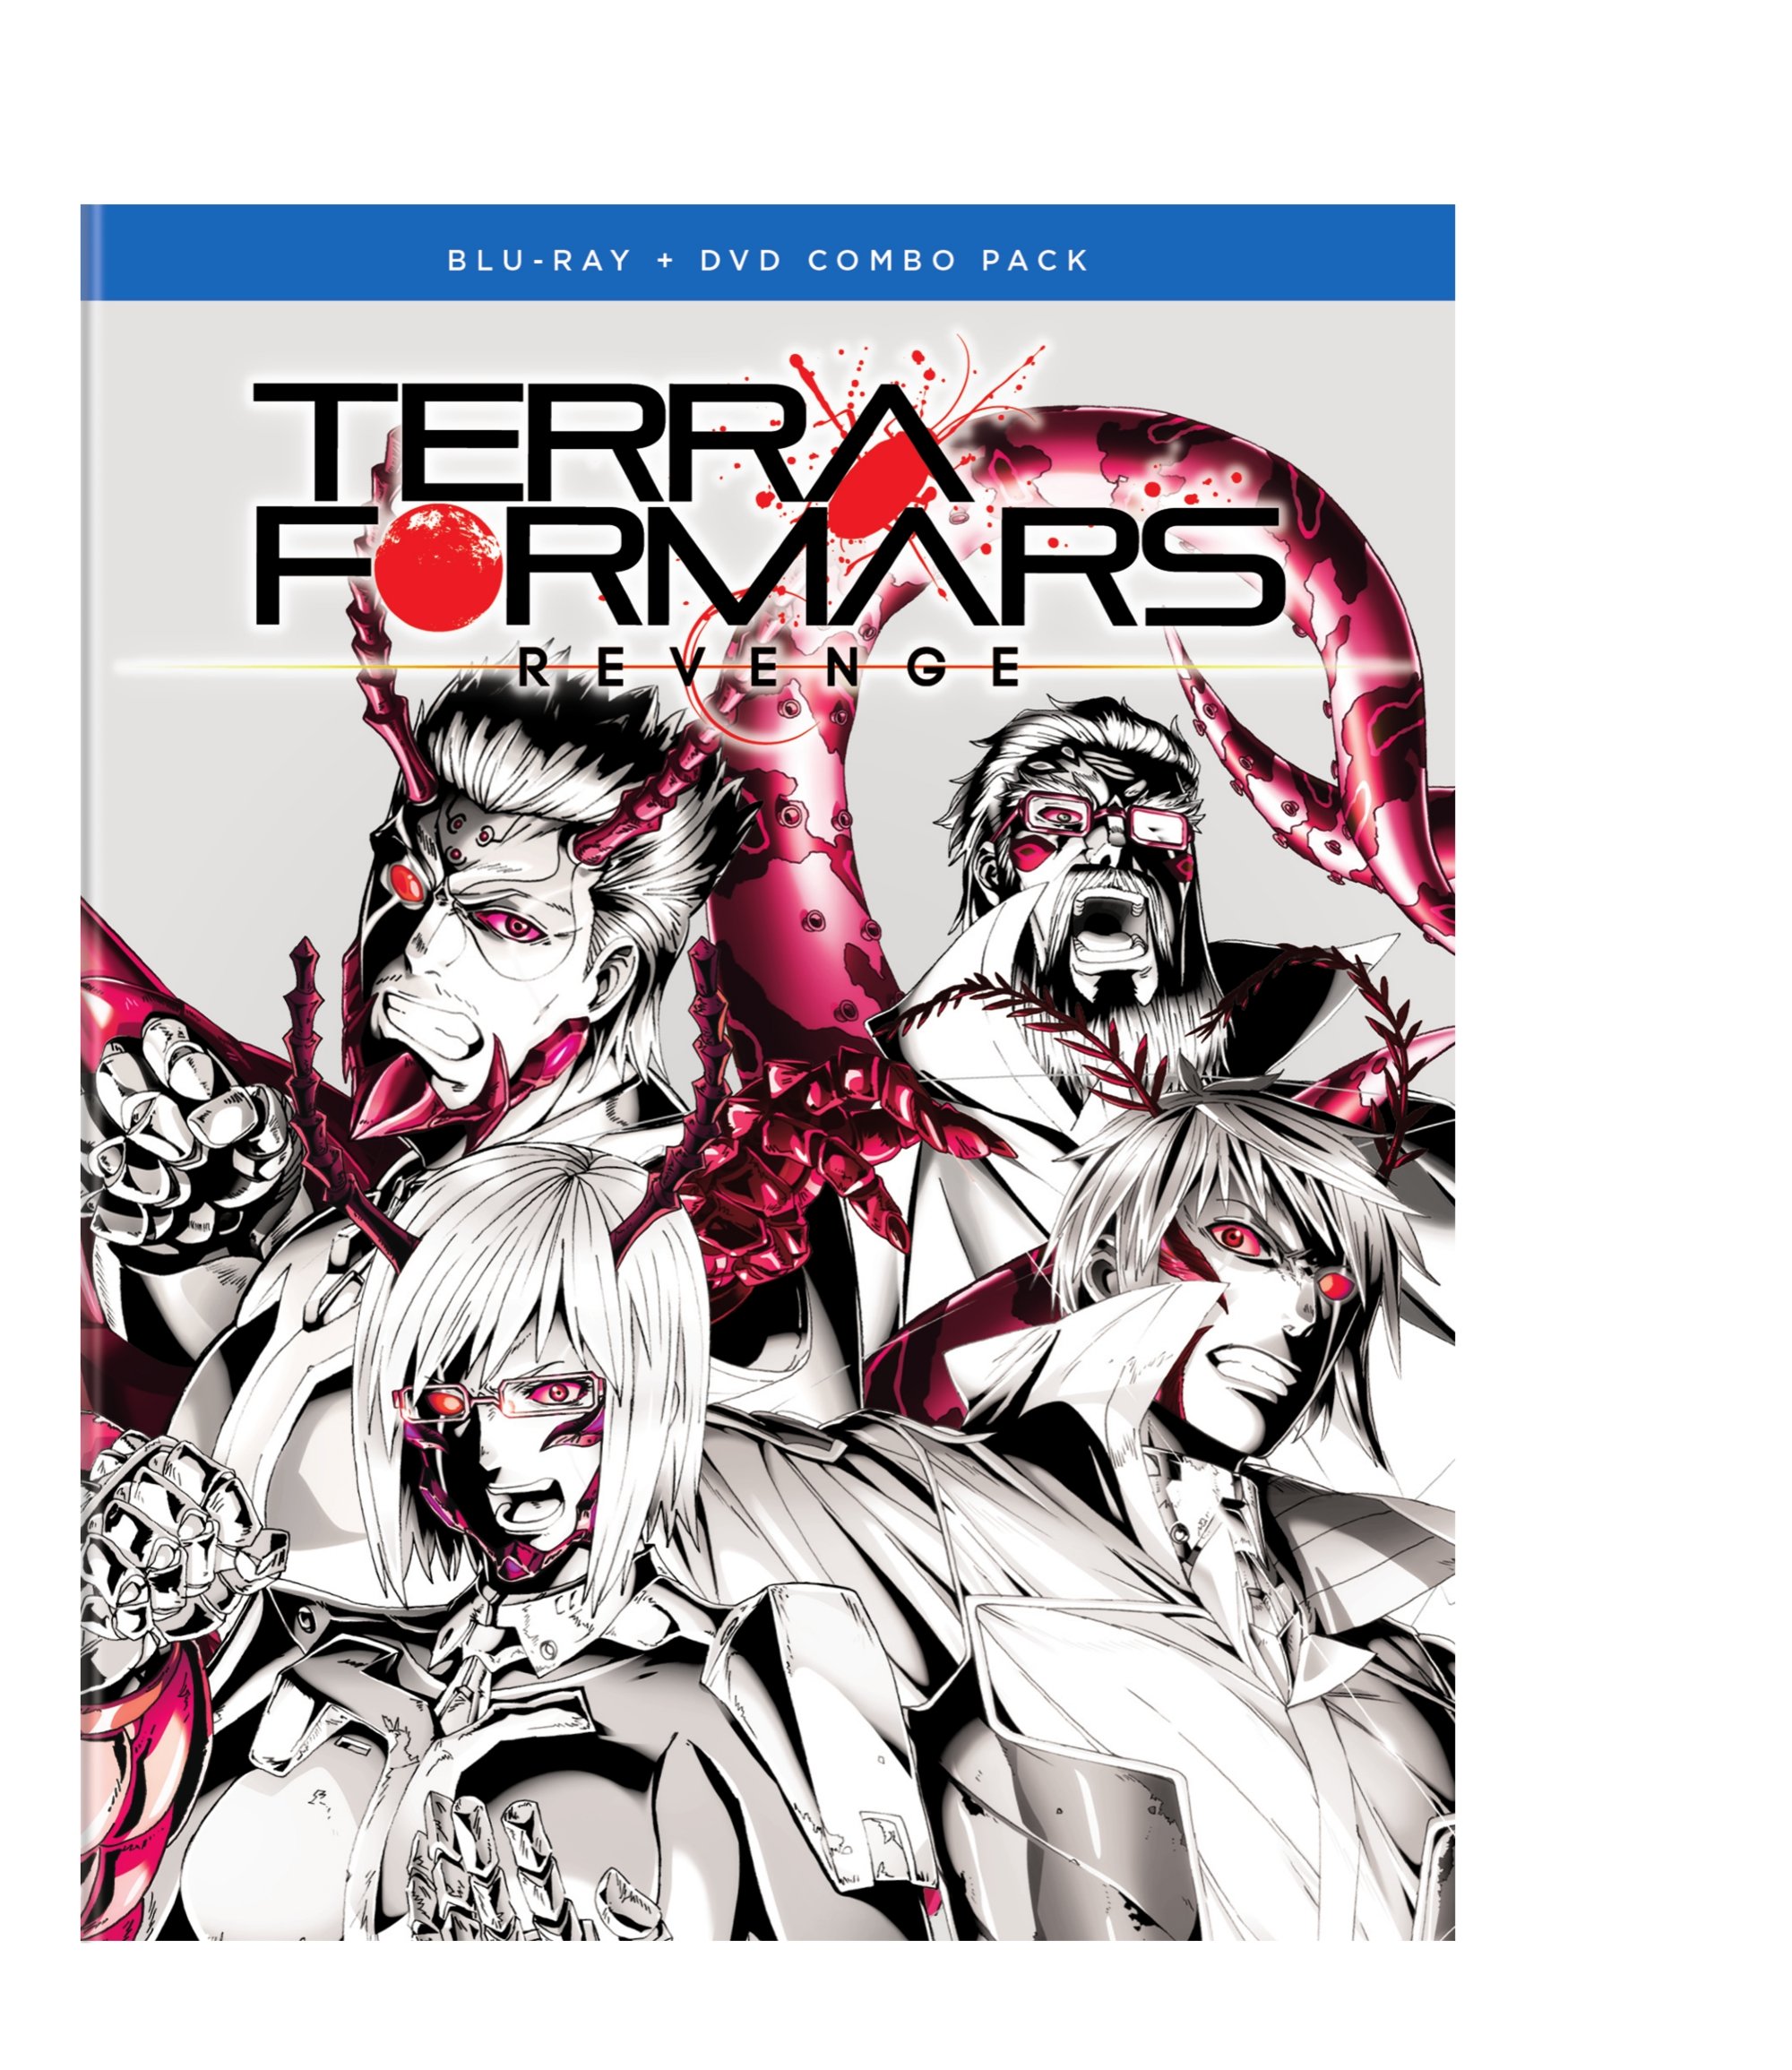 Terra Formars (Blu-ray + DVD) - Blu-ray [ 2016 ]  - Foreign Movies On Blu-ray - Movies On GRUV